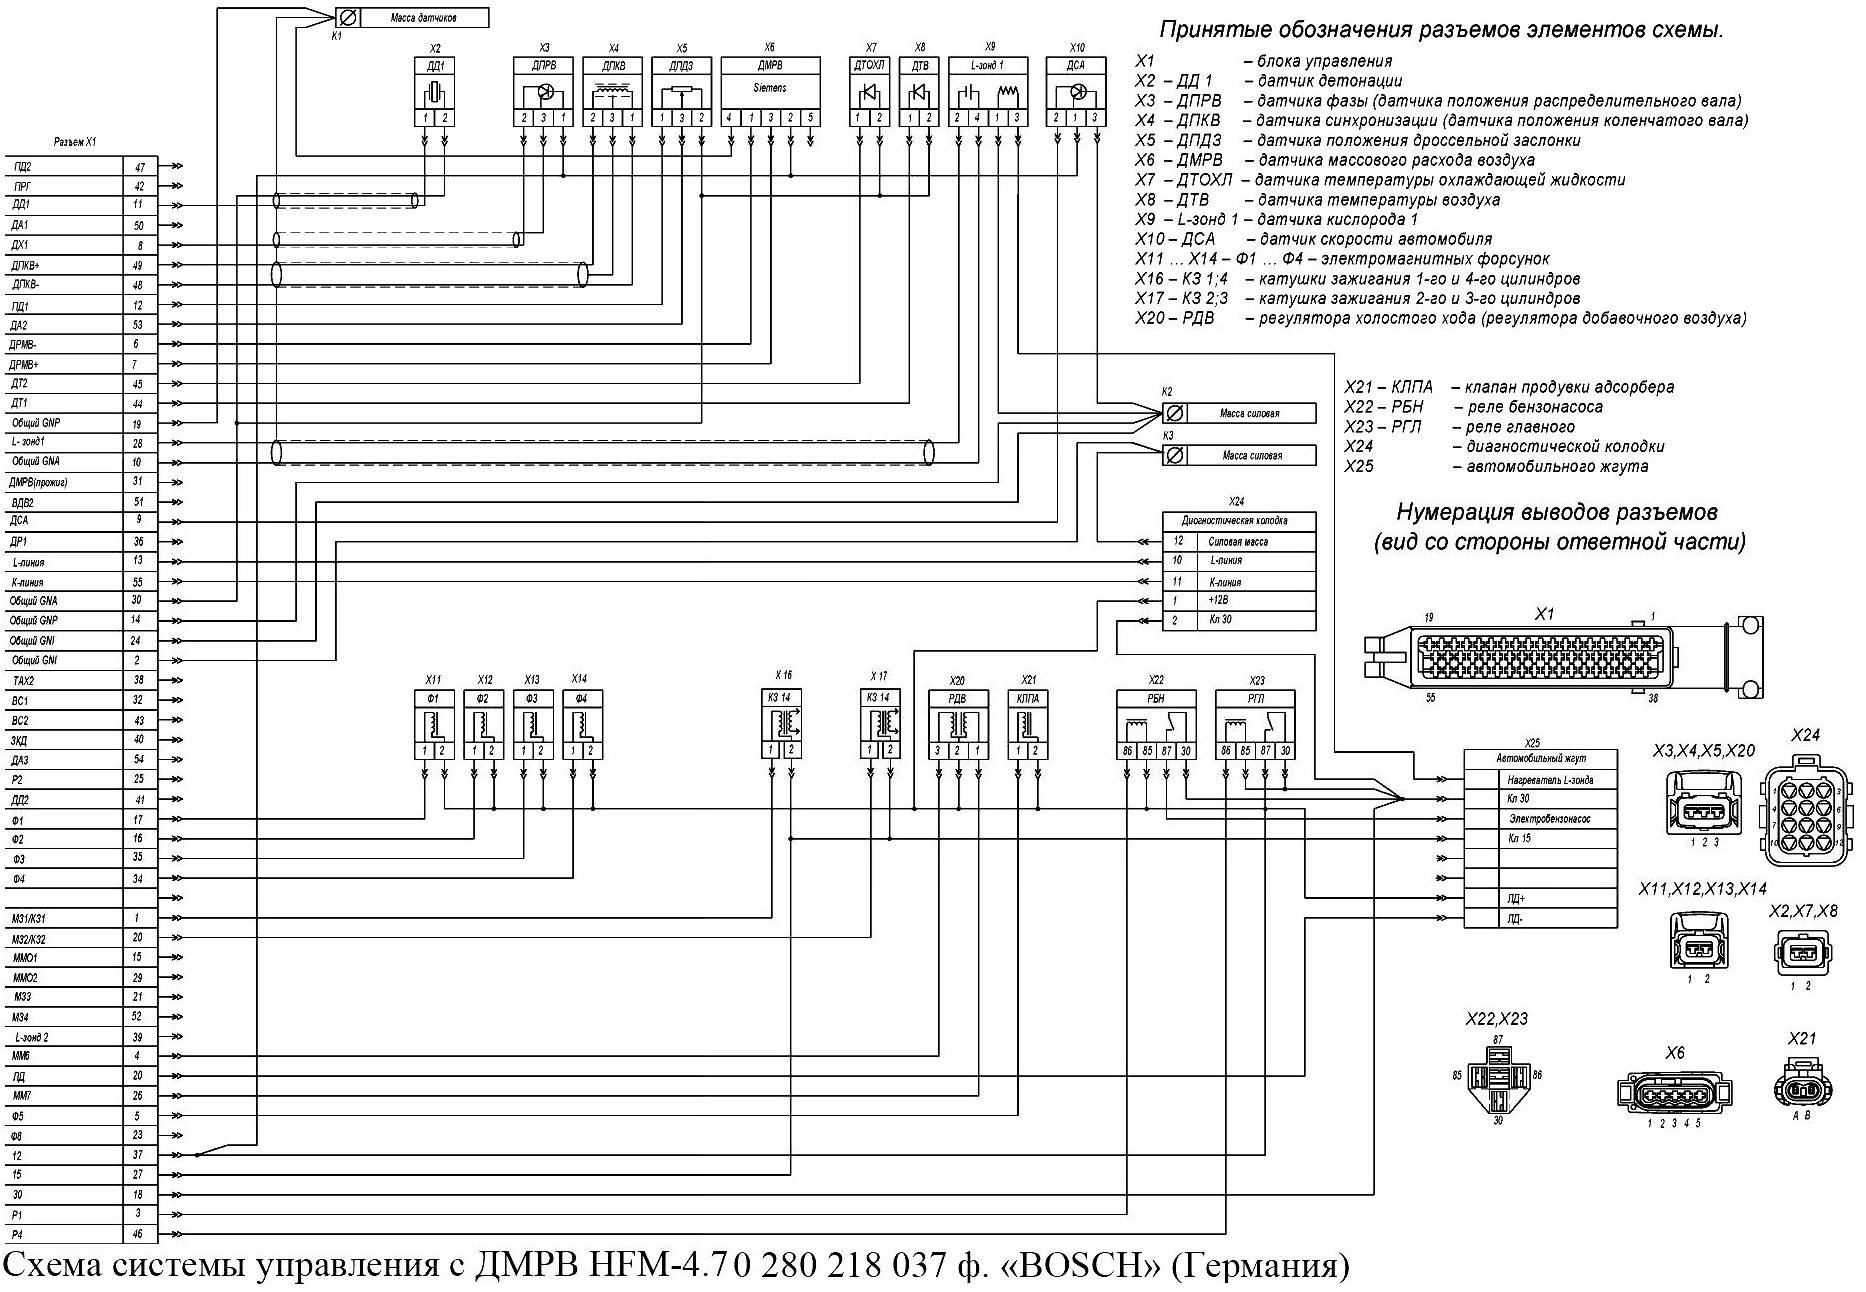 Scheme of the ZMZ-405 control system with DMRV HFM-4,7 0280218037 